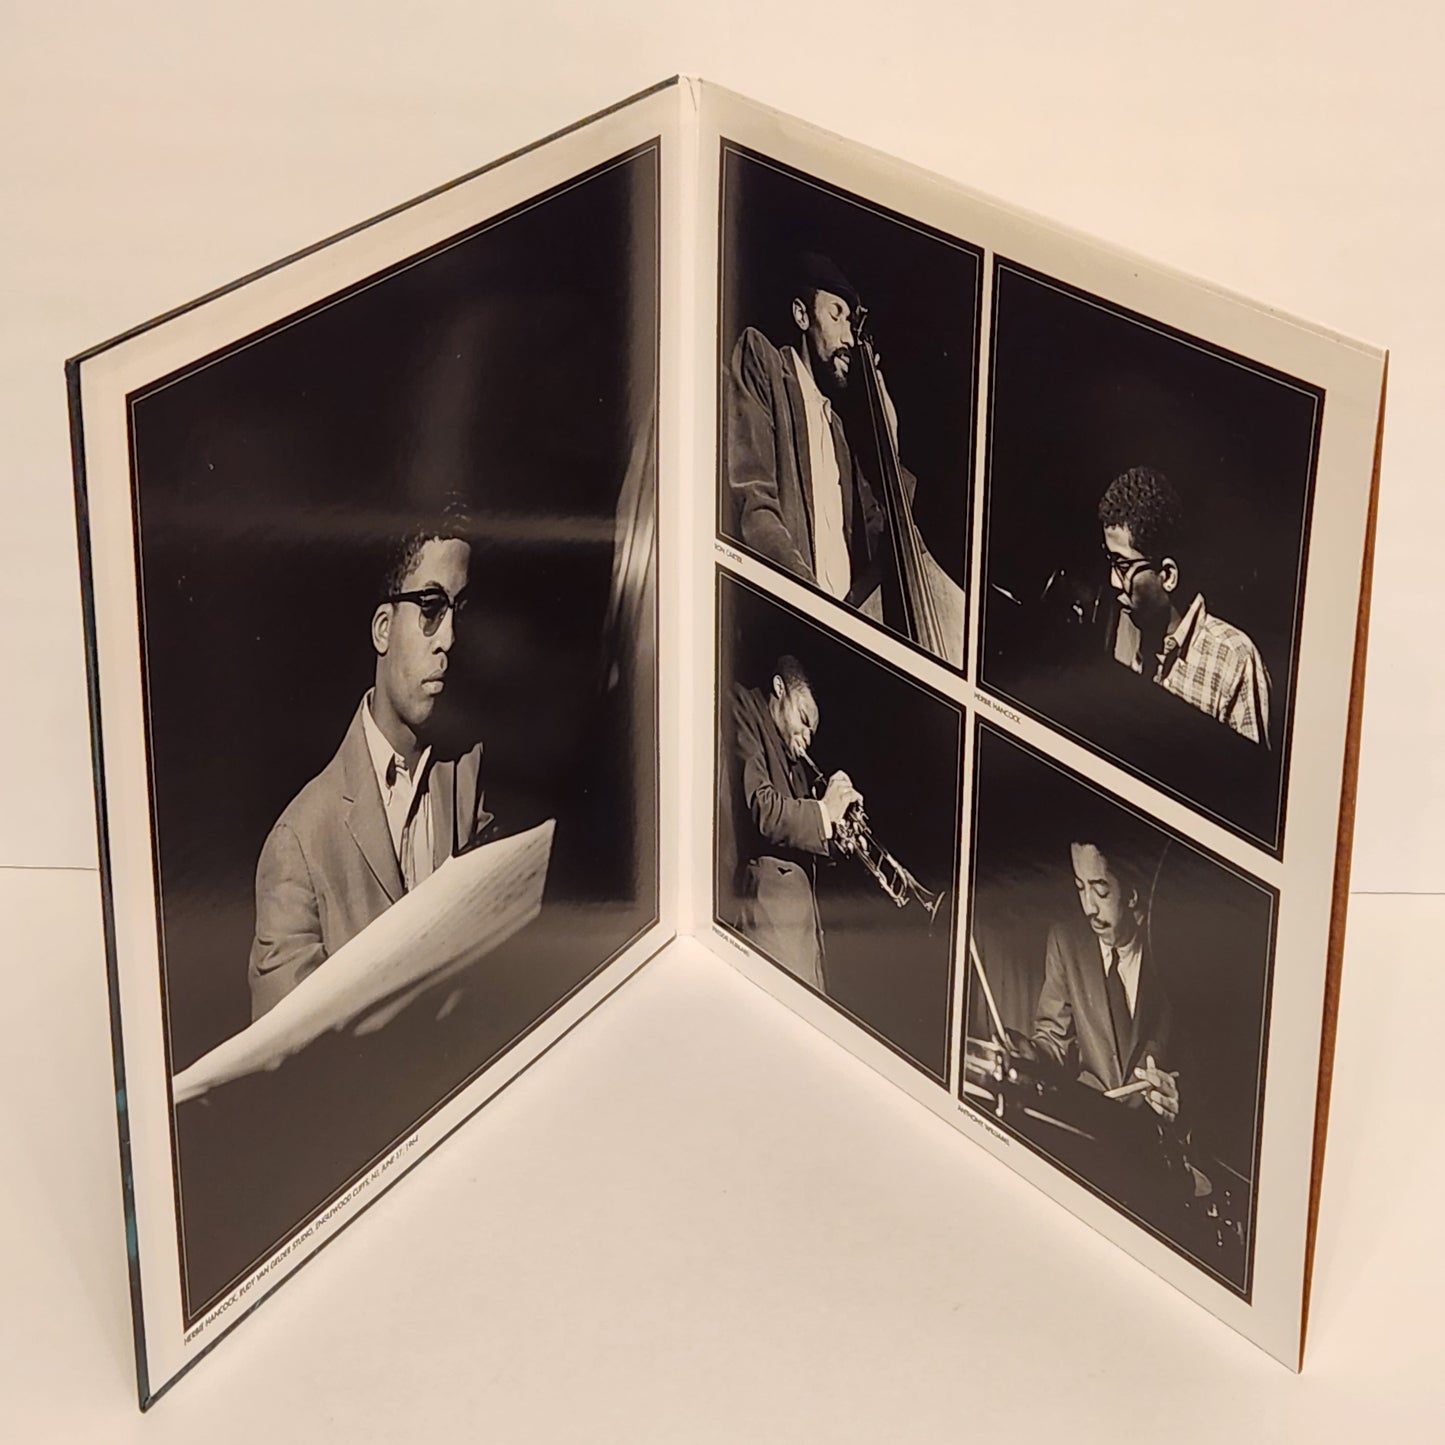 Herbie Hancock "Empyrean Isles" Jazz 2015 Limited Edition Blue Note Reissue Album